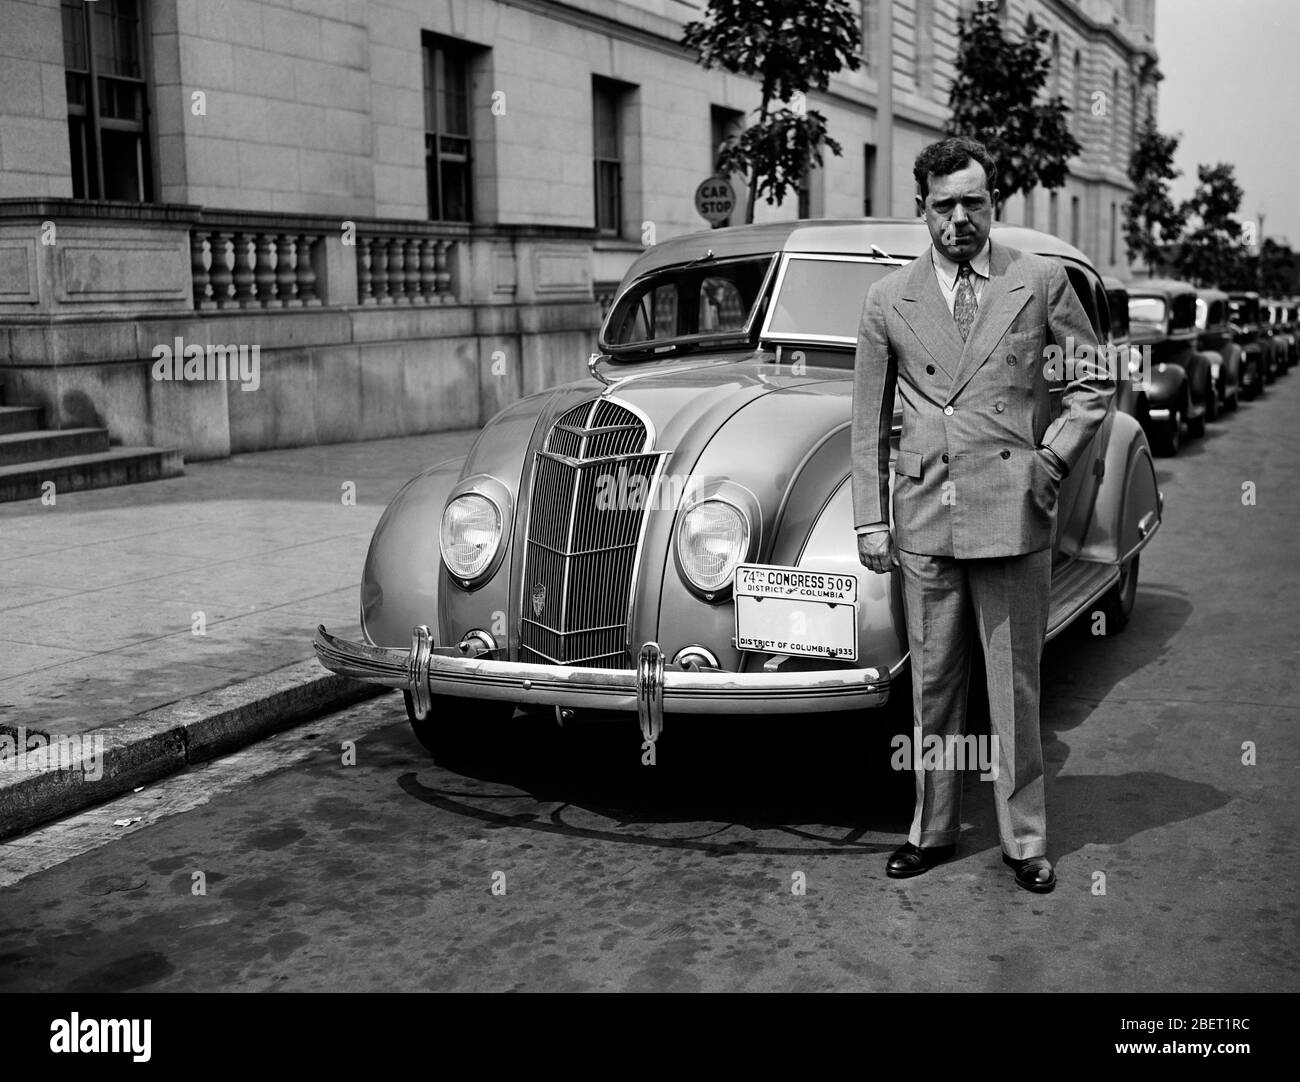 Senator Huey Long with his car in Washington D.C., 1935. Stock Photo